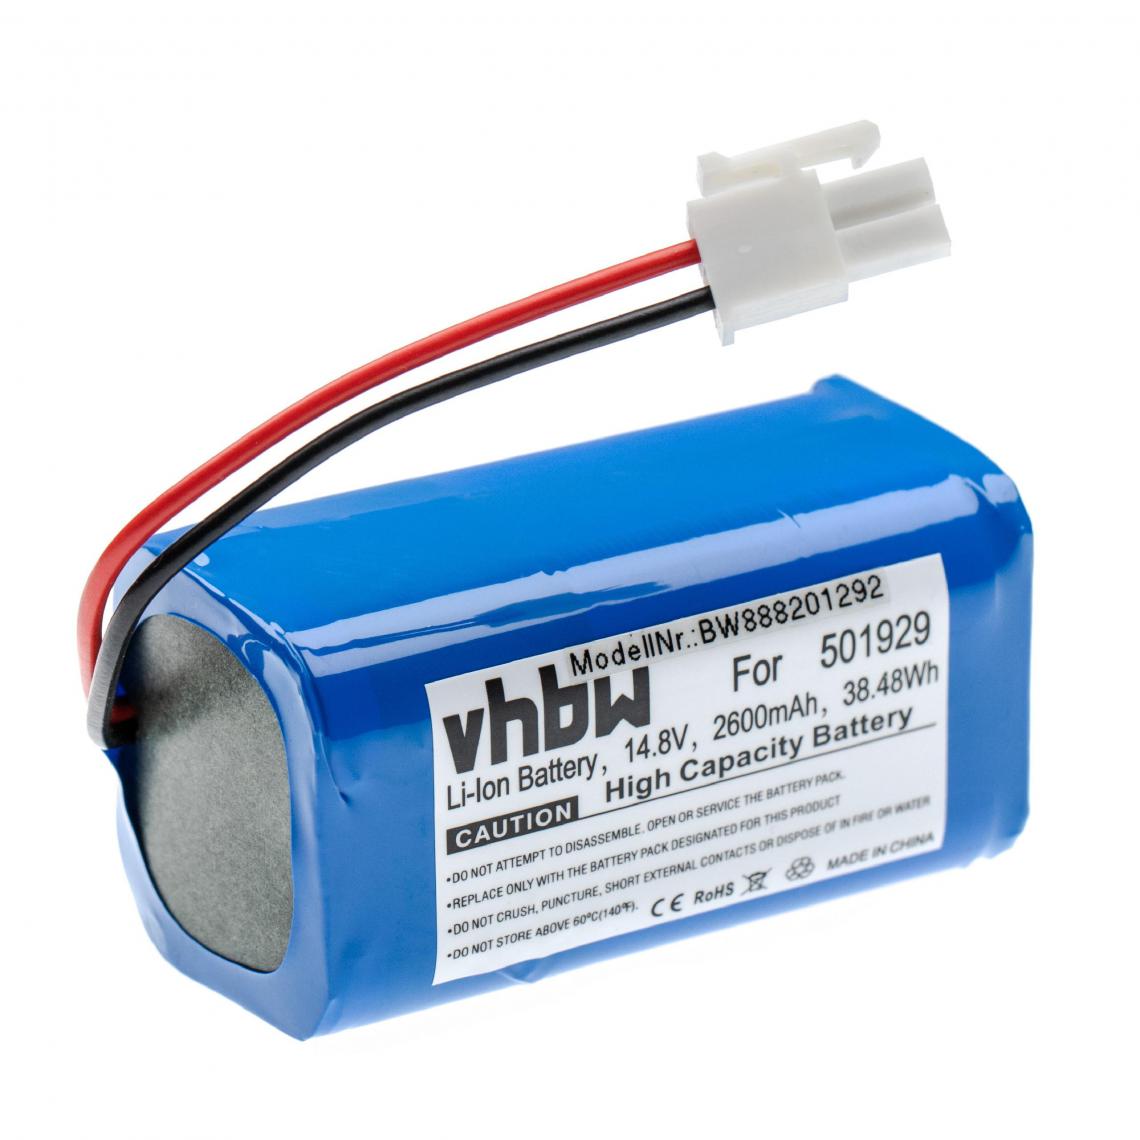 Vhbw - vhbw Batterie compatible avec Ecovacs KK8, N79S, V7, V780, V7S aspirateur, robot électroménager (2600mAh, 14,8V, Li-ion) - Accessoire entretien des sols